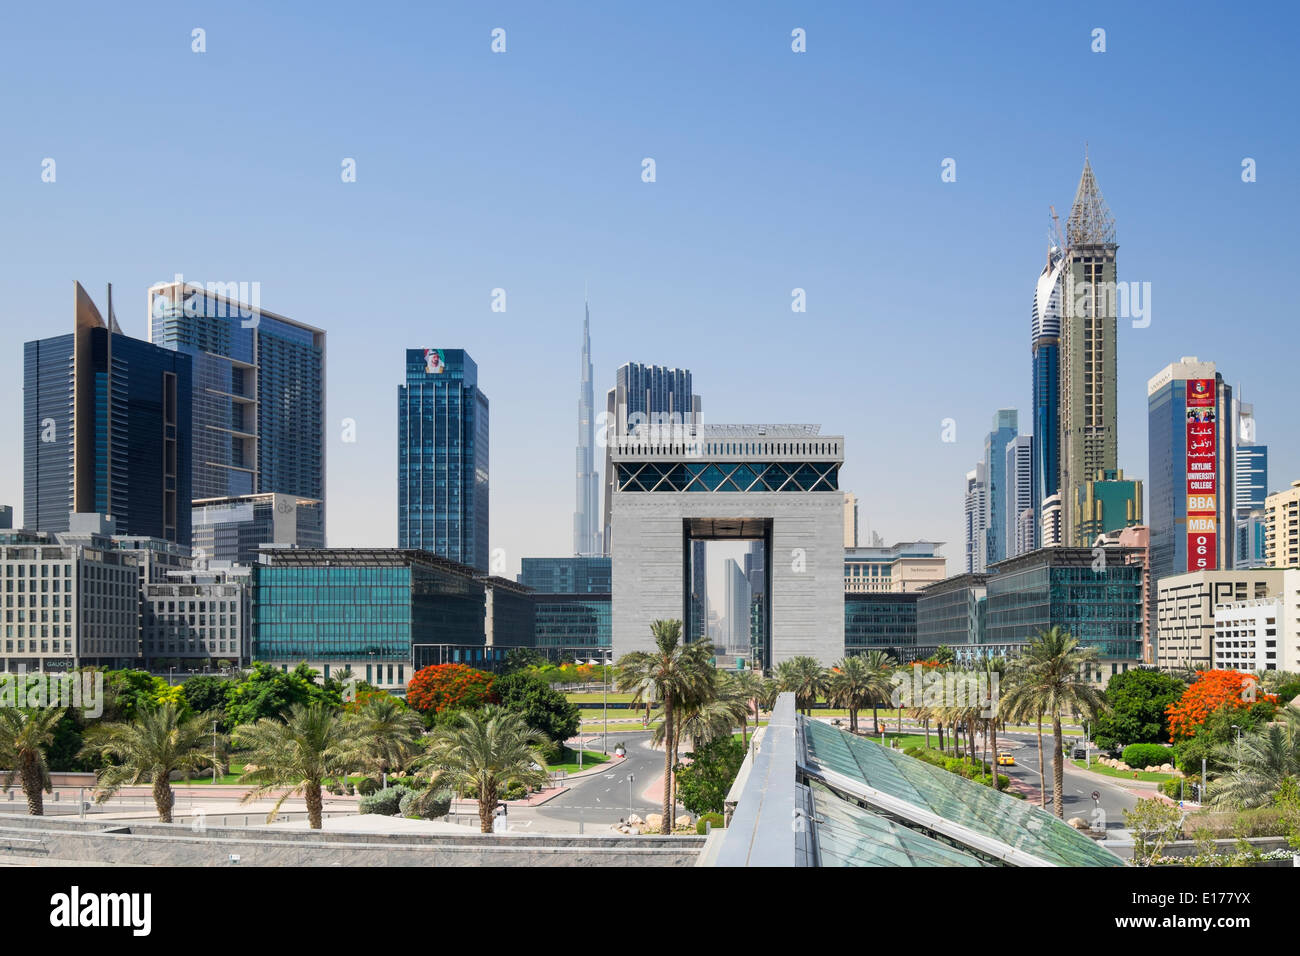 View of DIFC the Dubai International Financial Centre (free zone) in financial district of Dubai United Arab Emirates Stock Photo